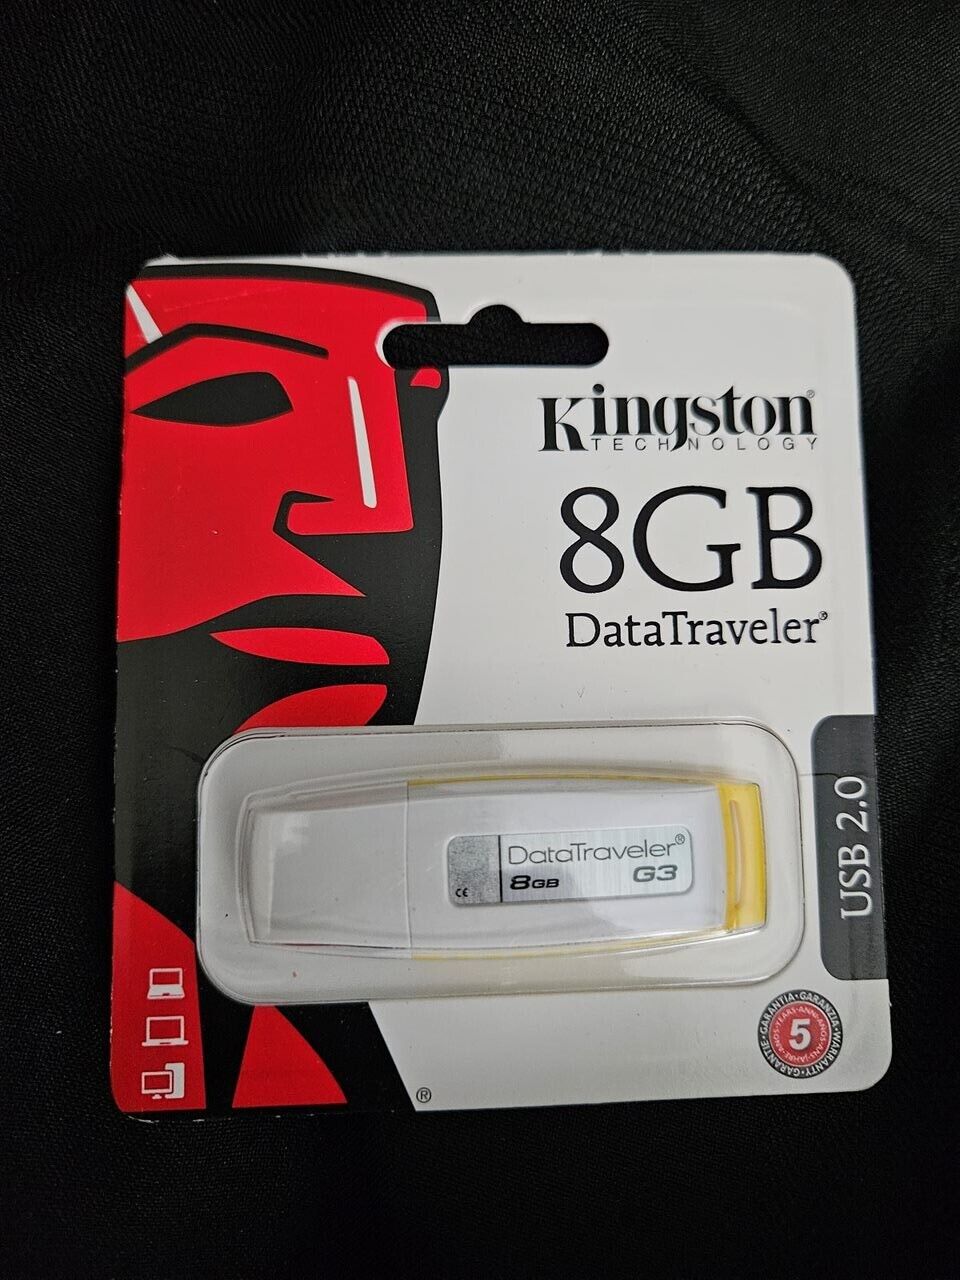 Kingston Technology 8GB USB DataTraveler  DTIG3/8GBZ